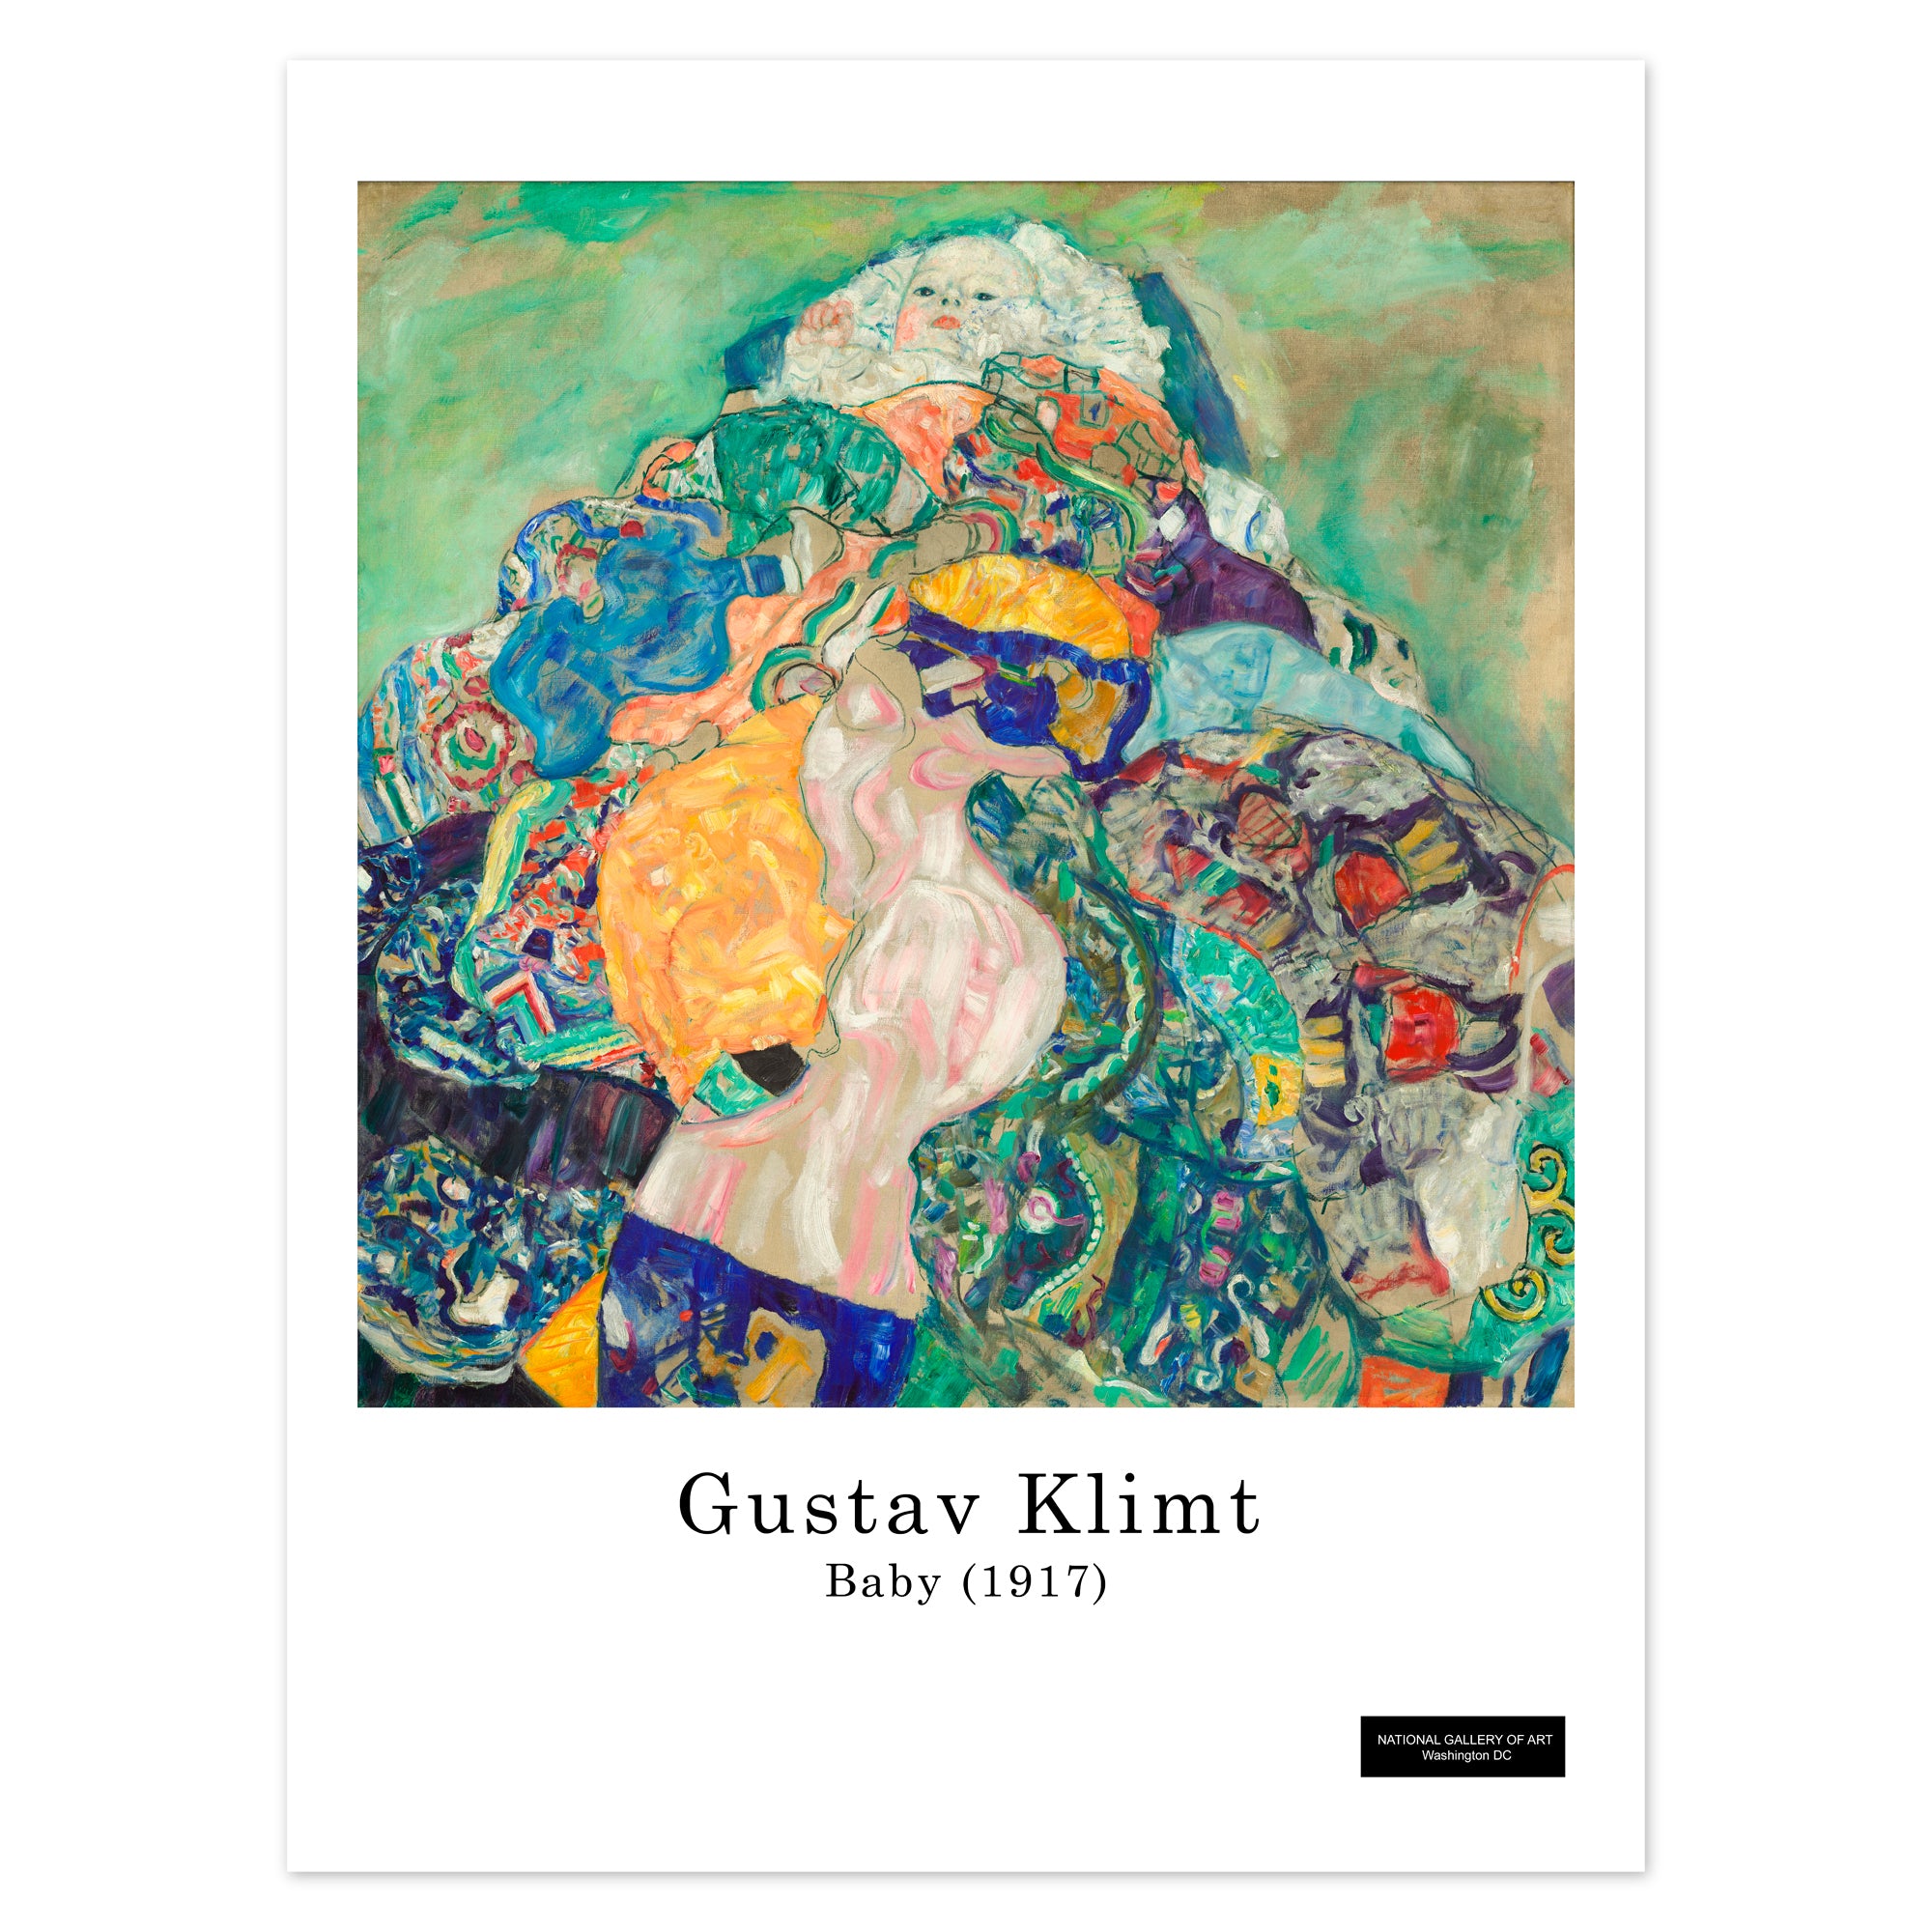 Gustav Klimt Poster - Baby